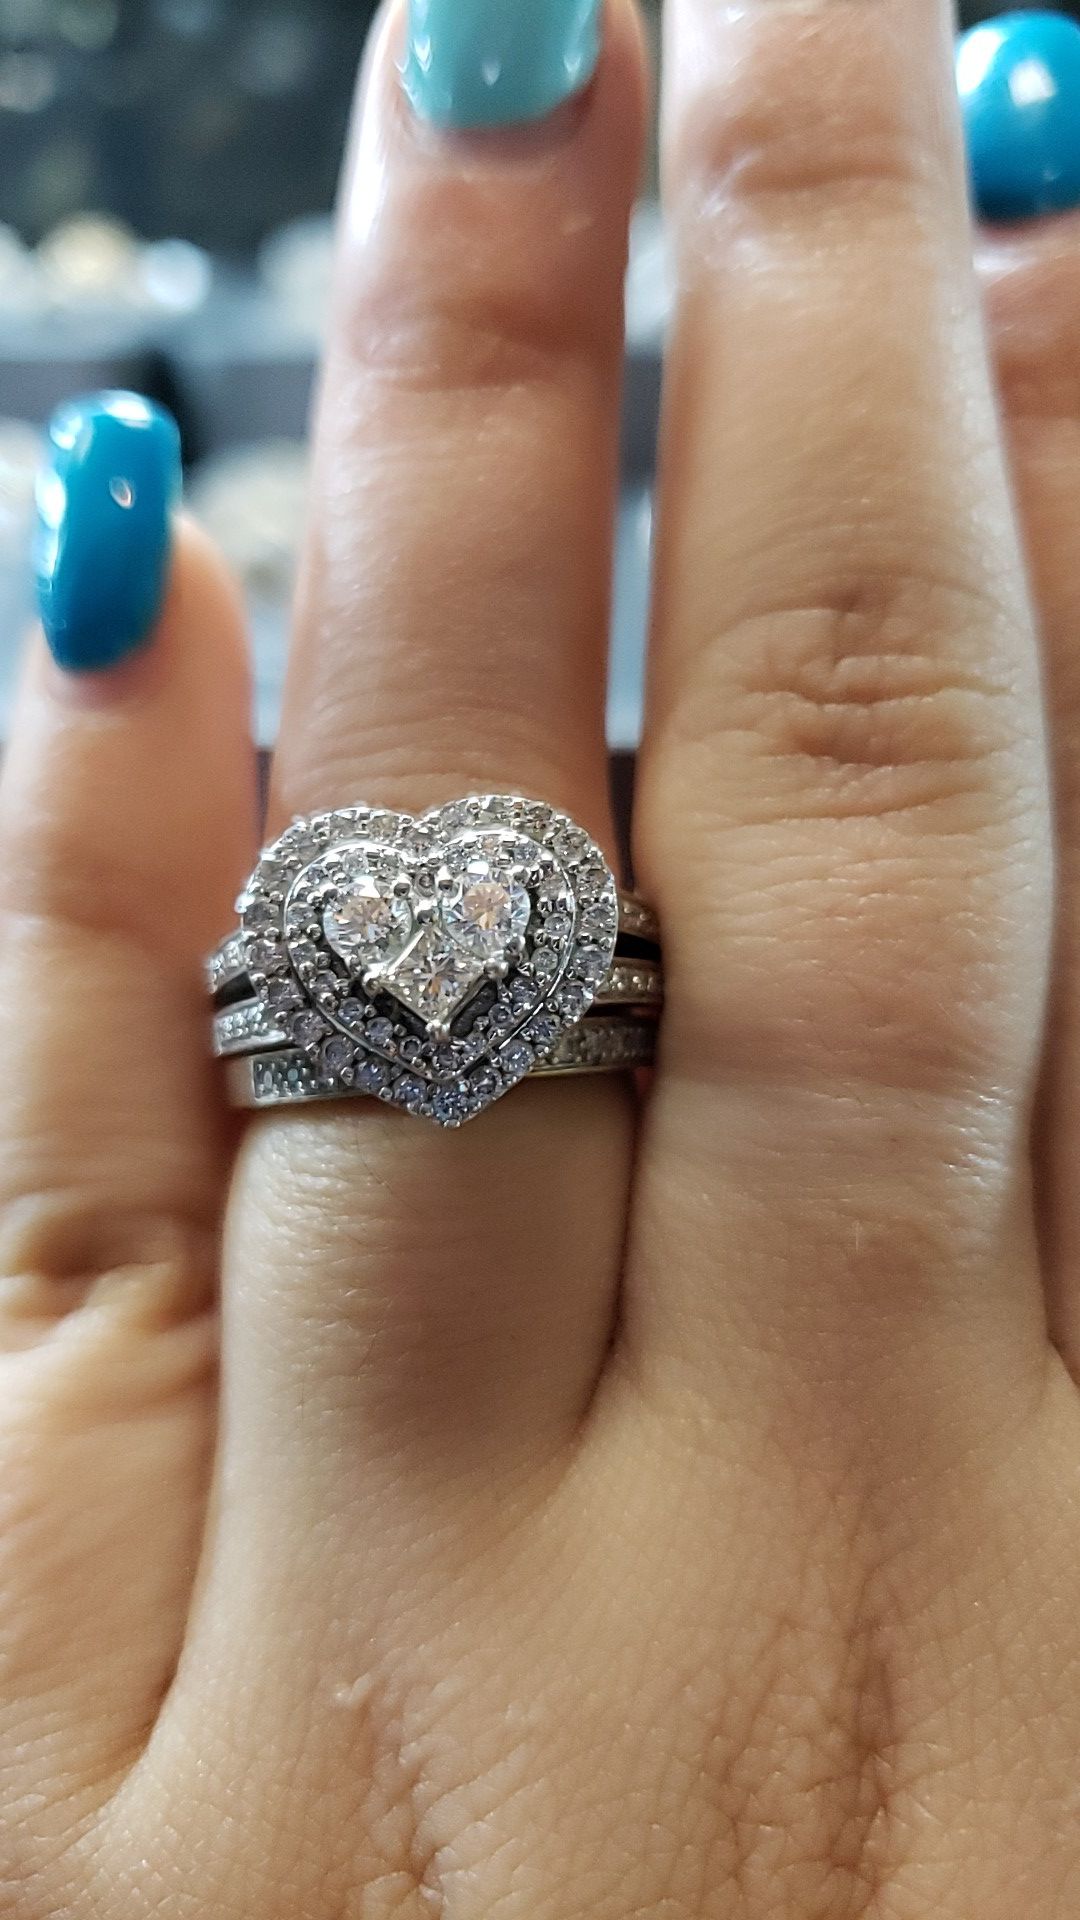 Heart shape diamond ring